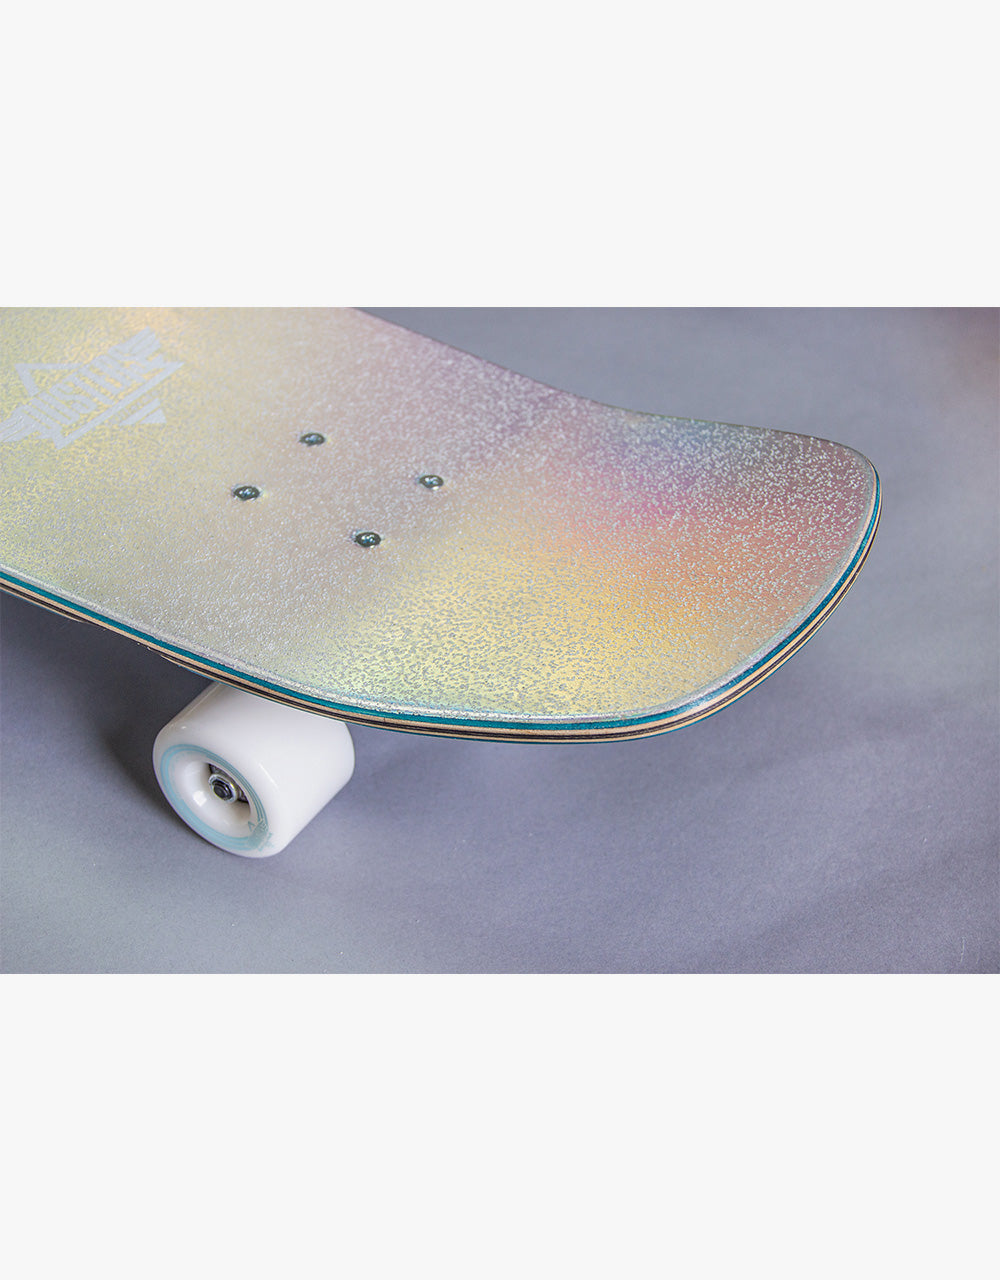 Dusters Cazh Cosmic Cruiser Skateboard - 8.75" x 29.5"